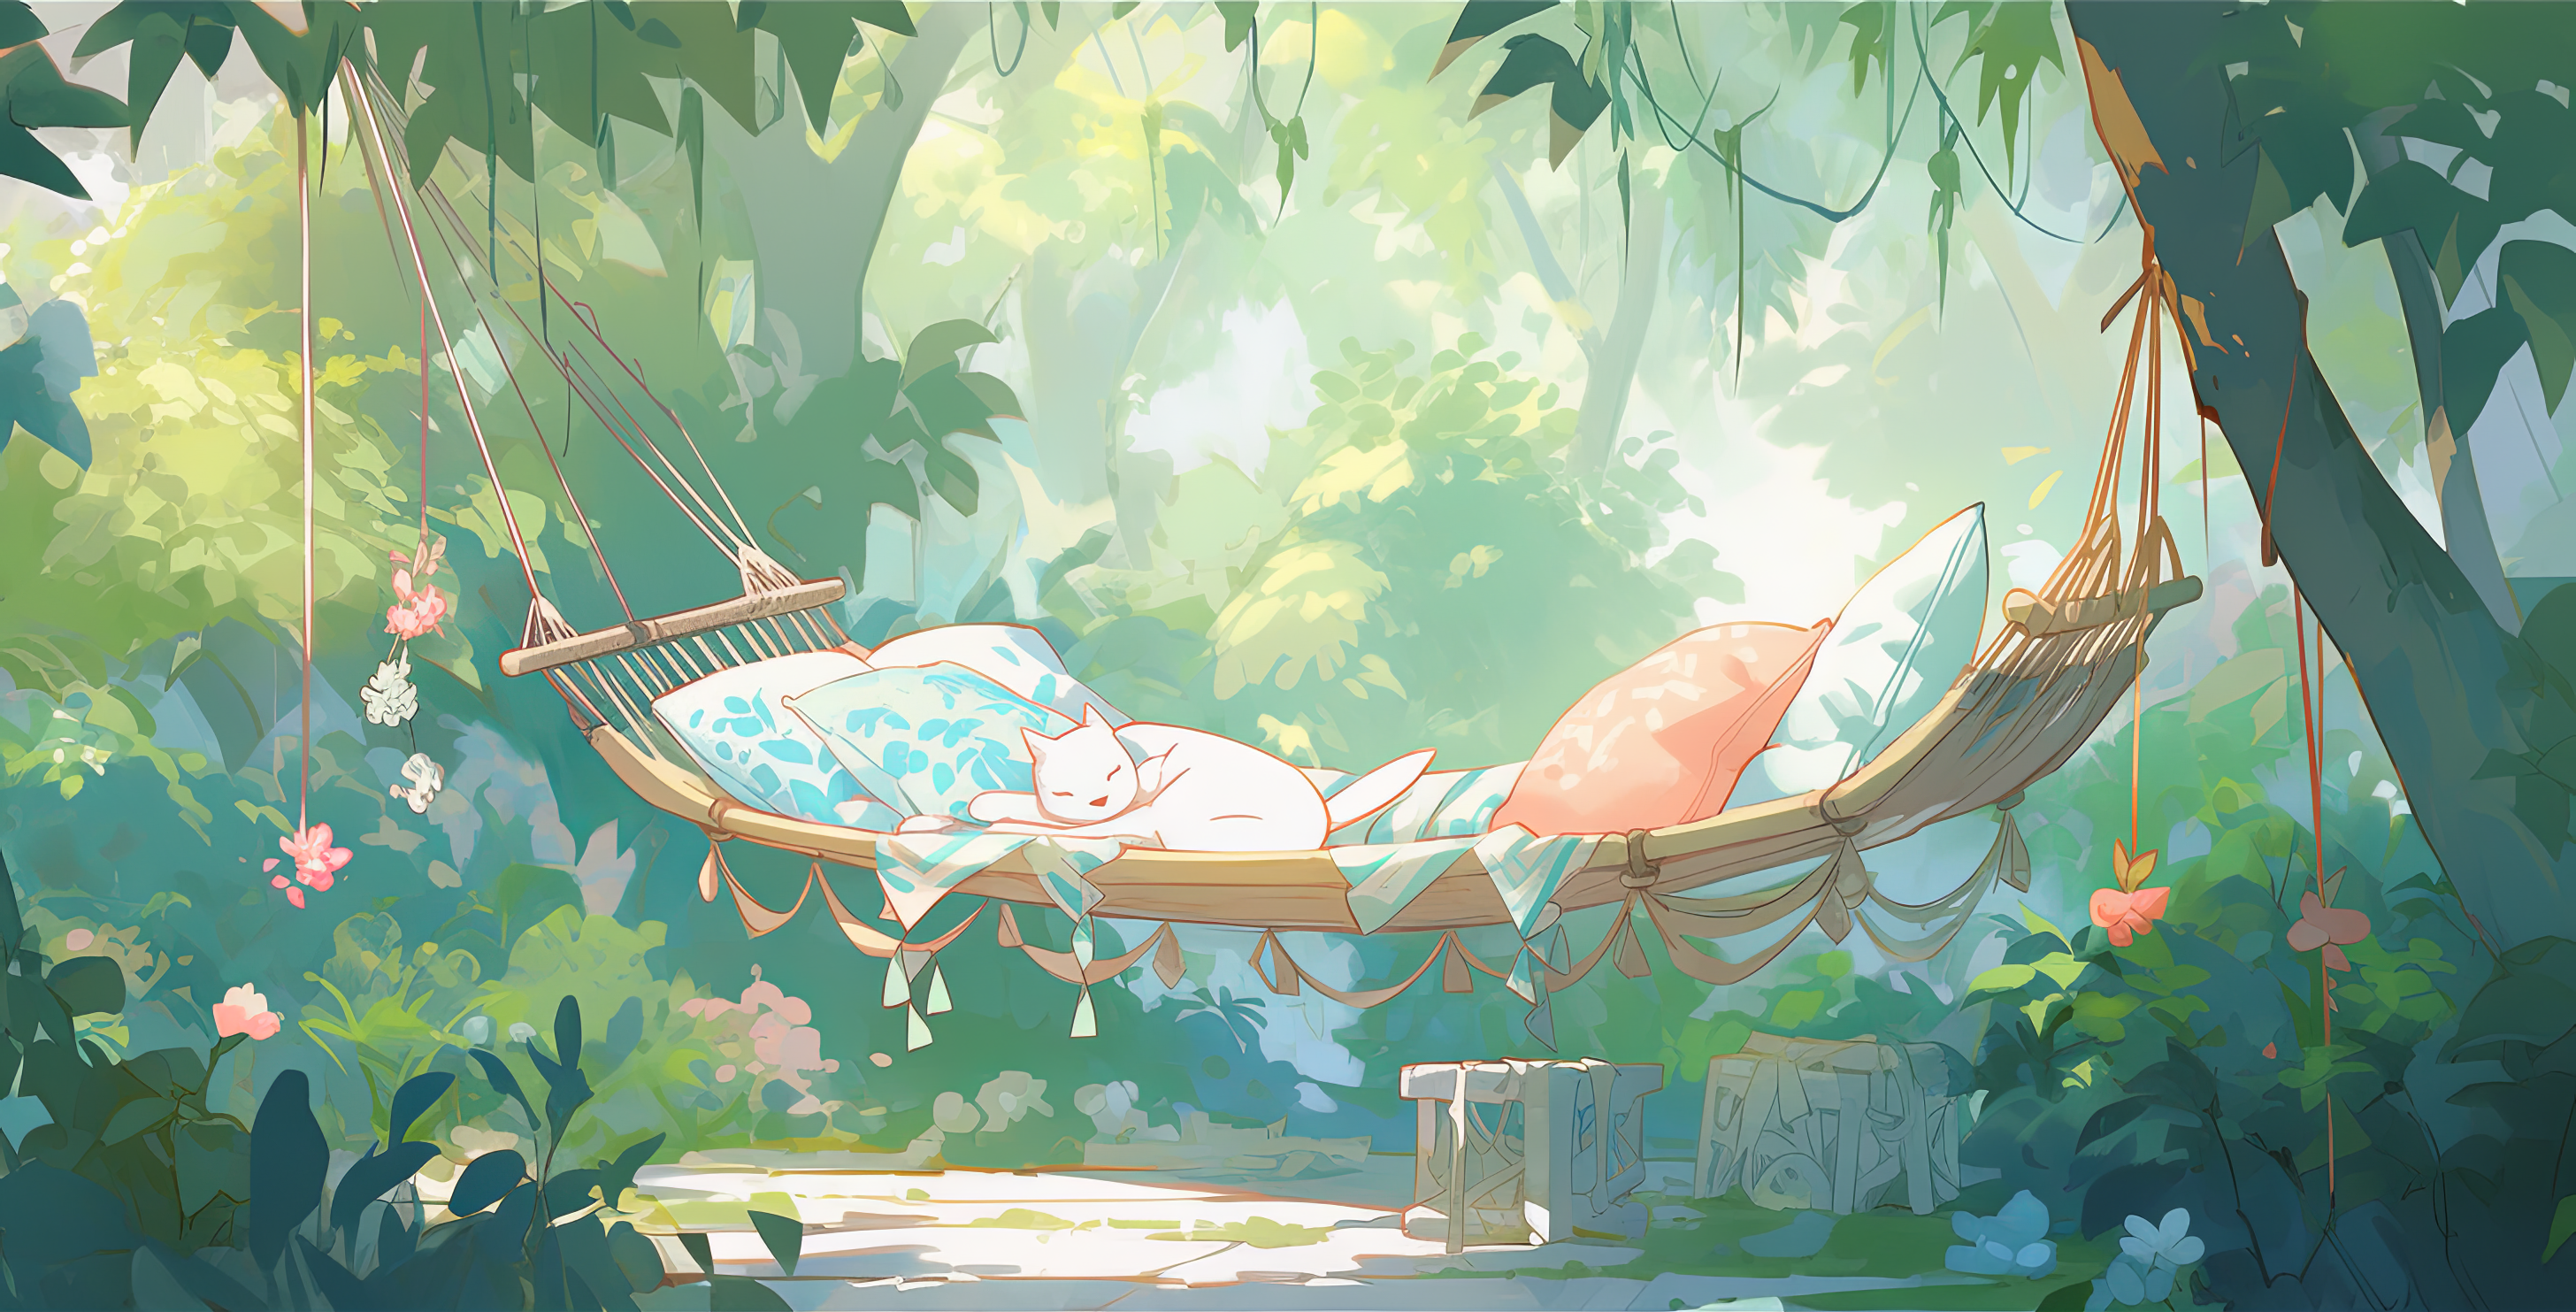 Relaxing HD desktop wallpaper featuring an AI-generated art piece of a hammock with pillows and a sleeping cat, set in a serene, lush garden.